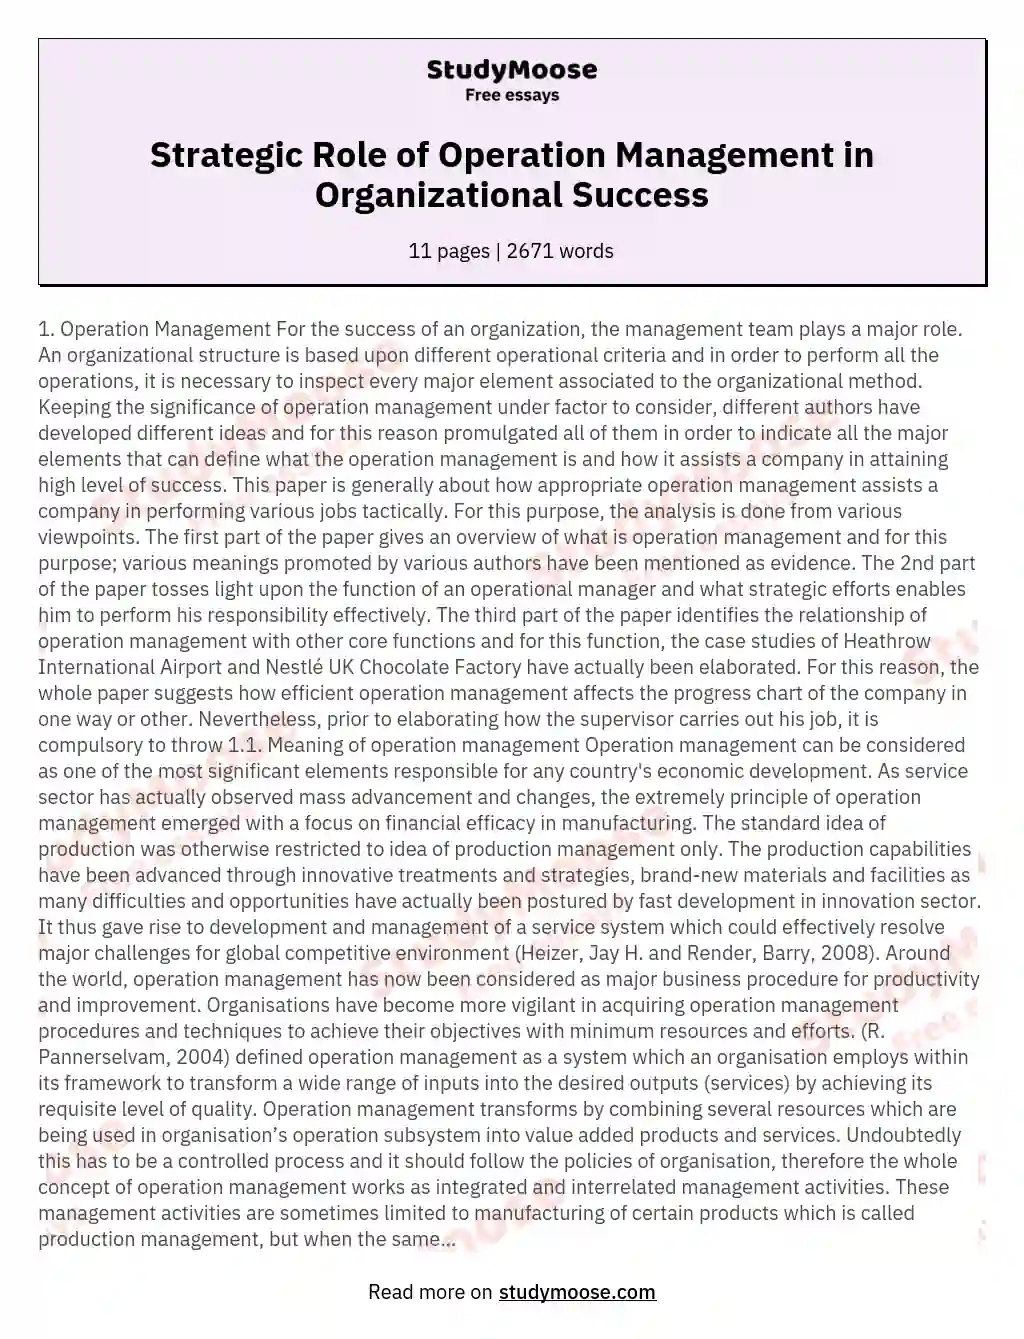 operation management essay sample